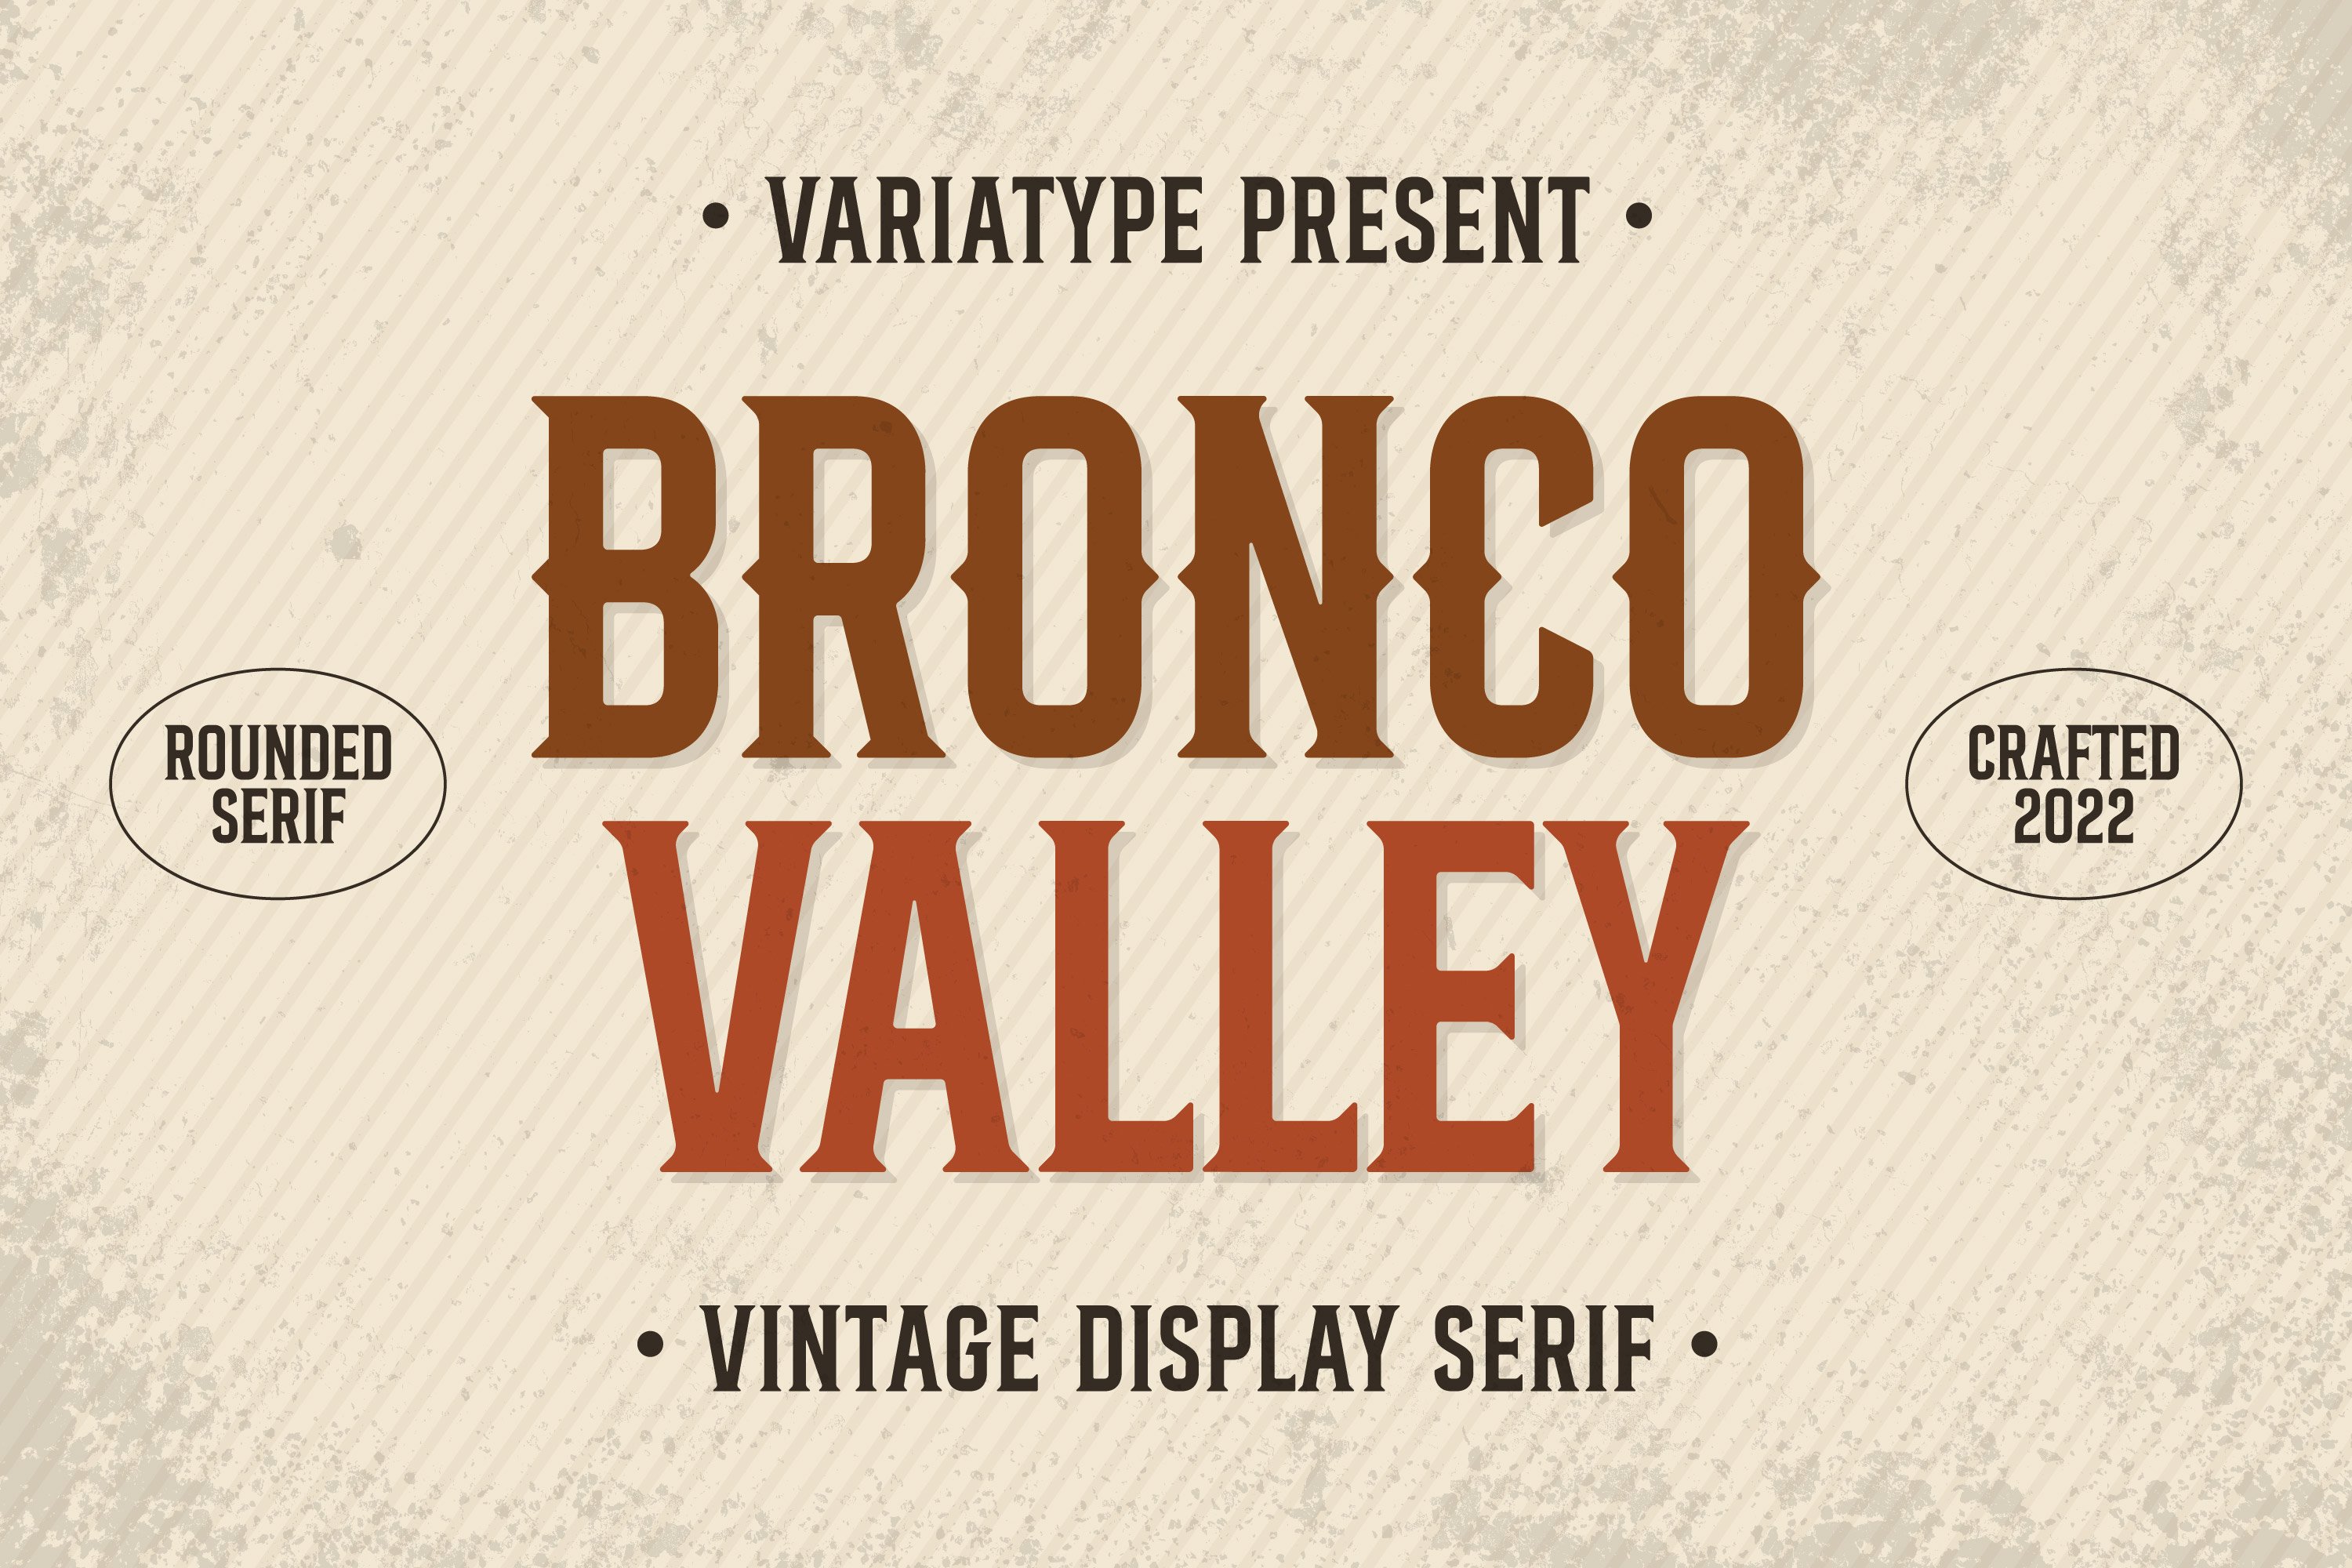 Bronco Valley - Vintage Serif cover image.